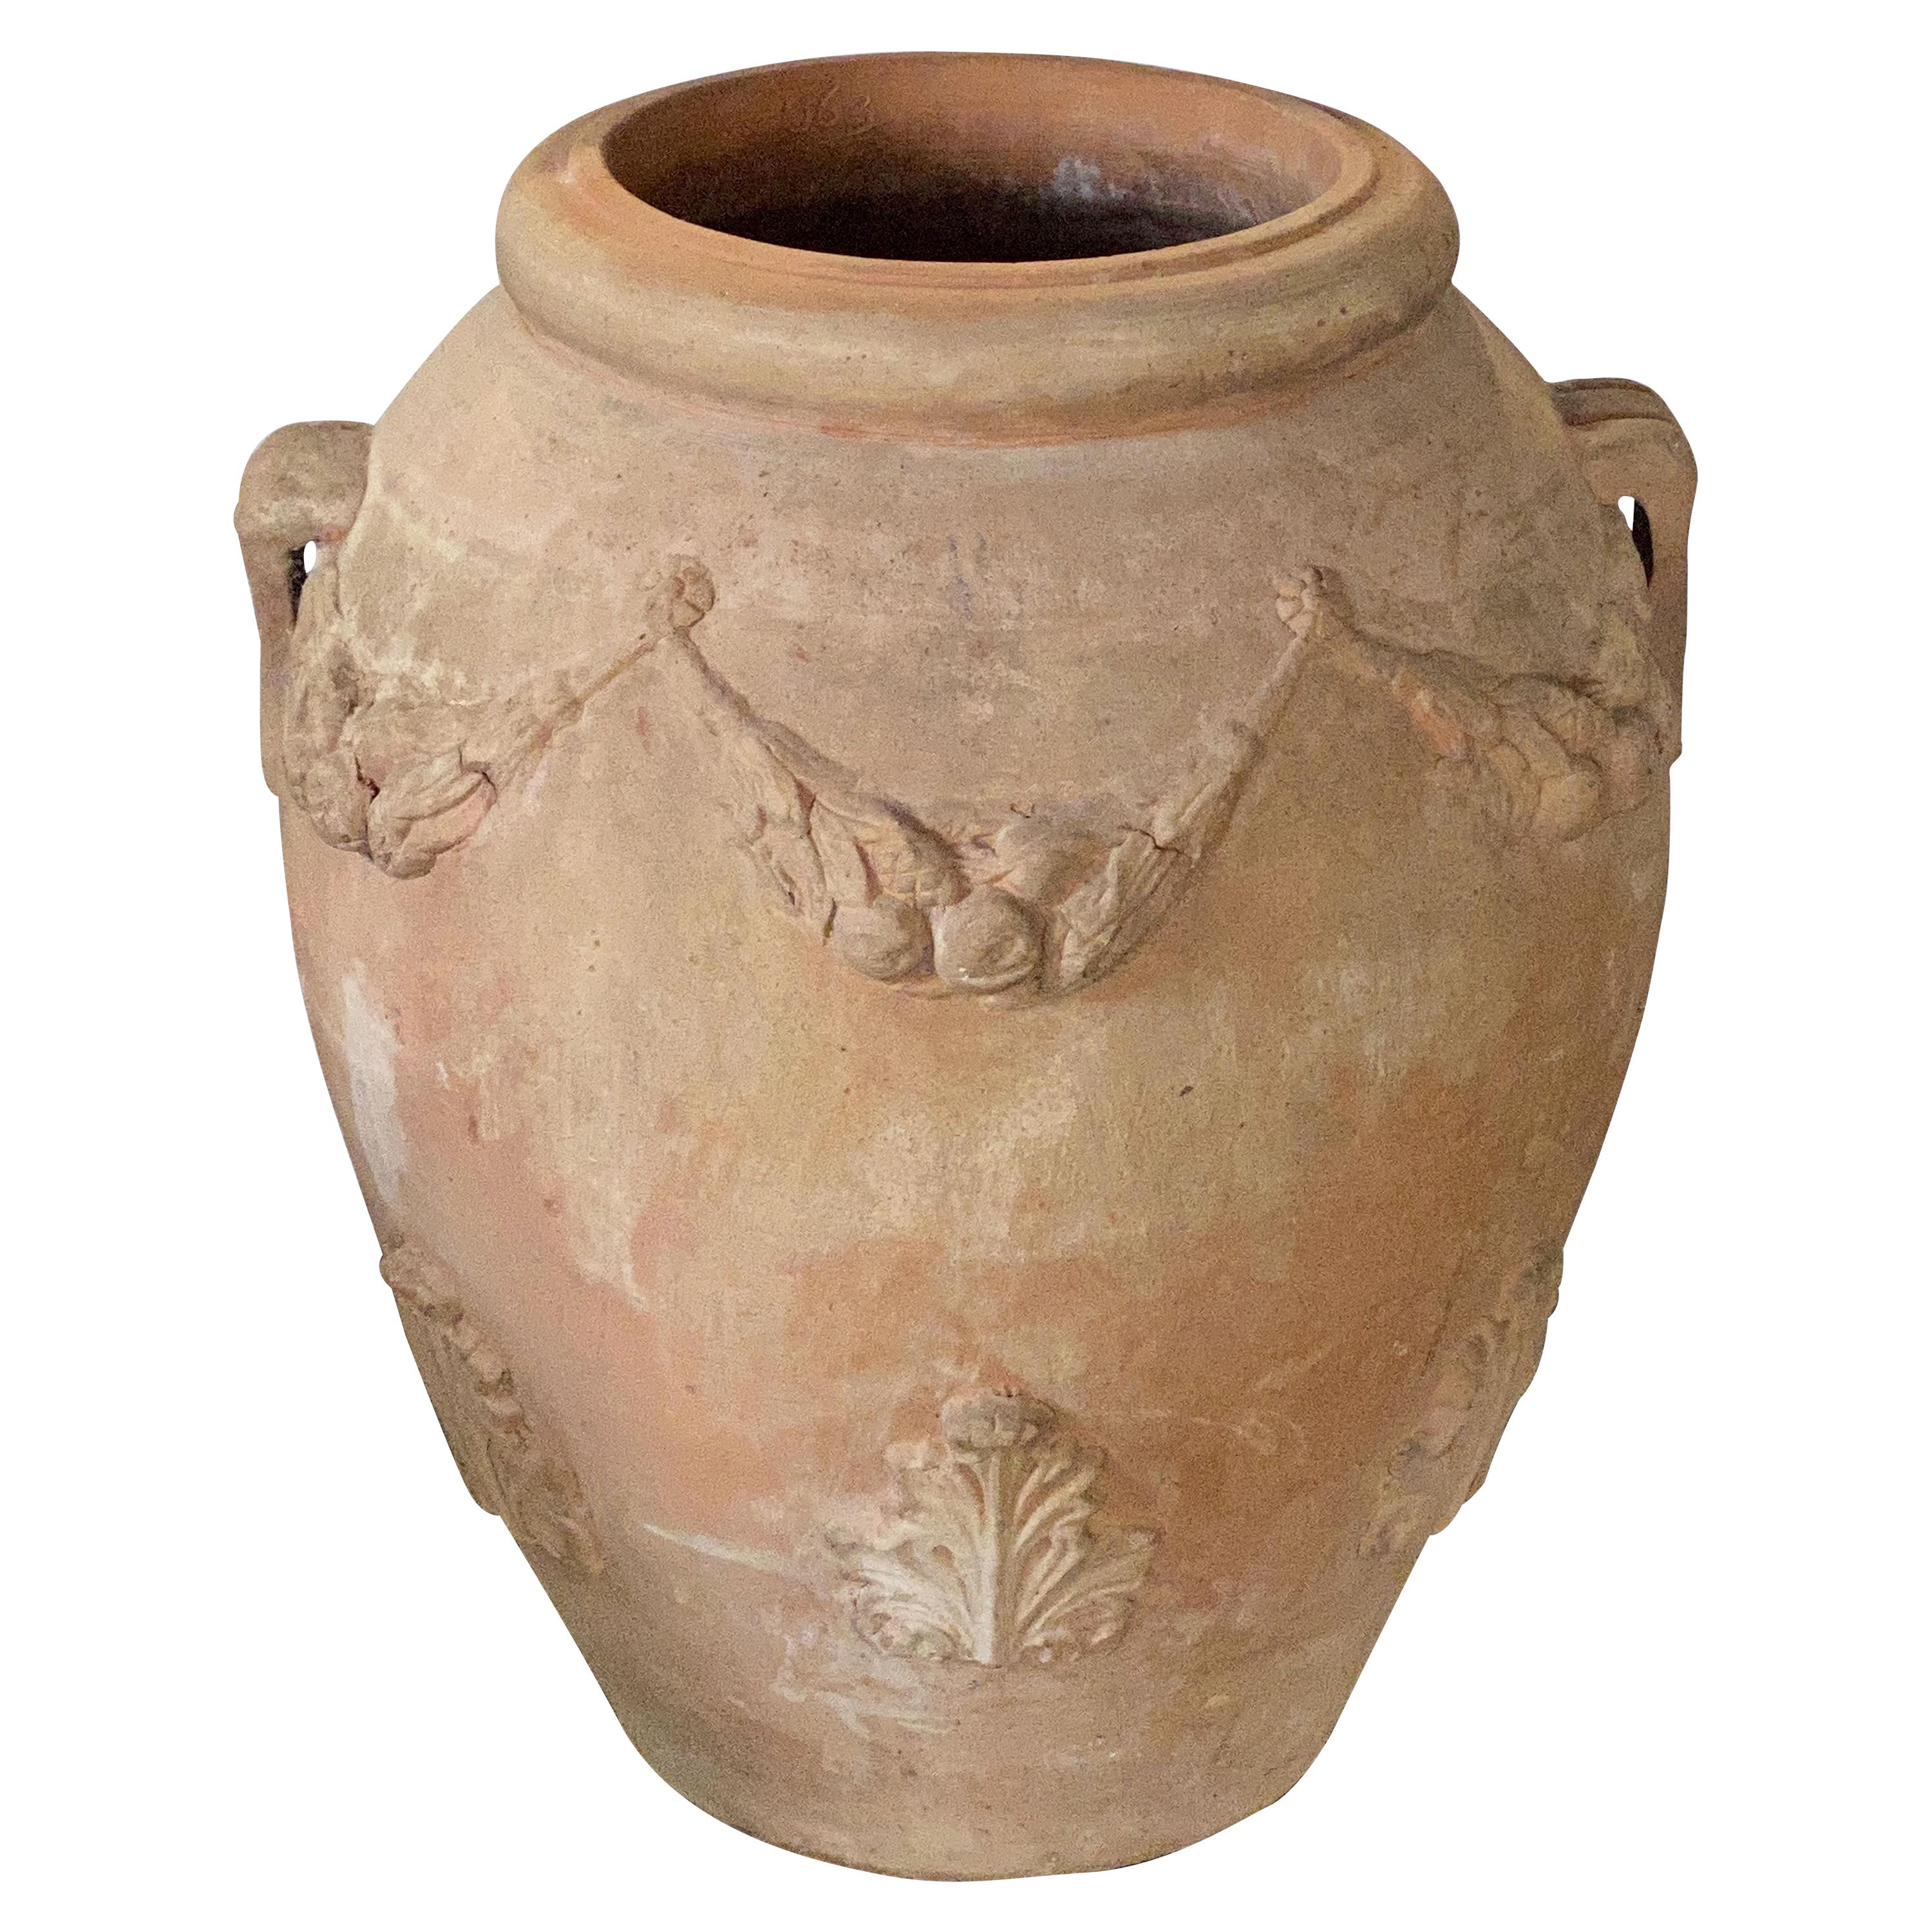 Large Terracotta Garden Urn or Oil Jar from France